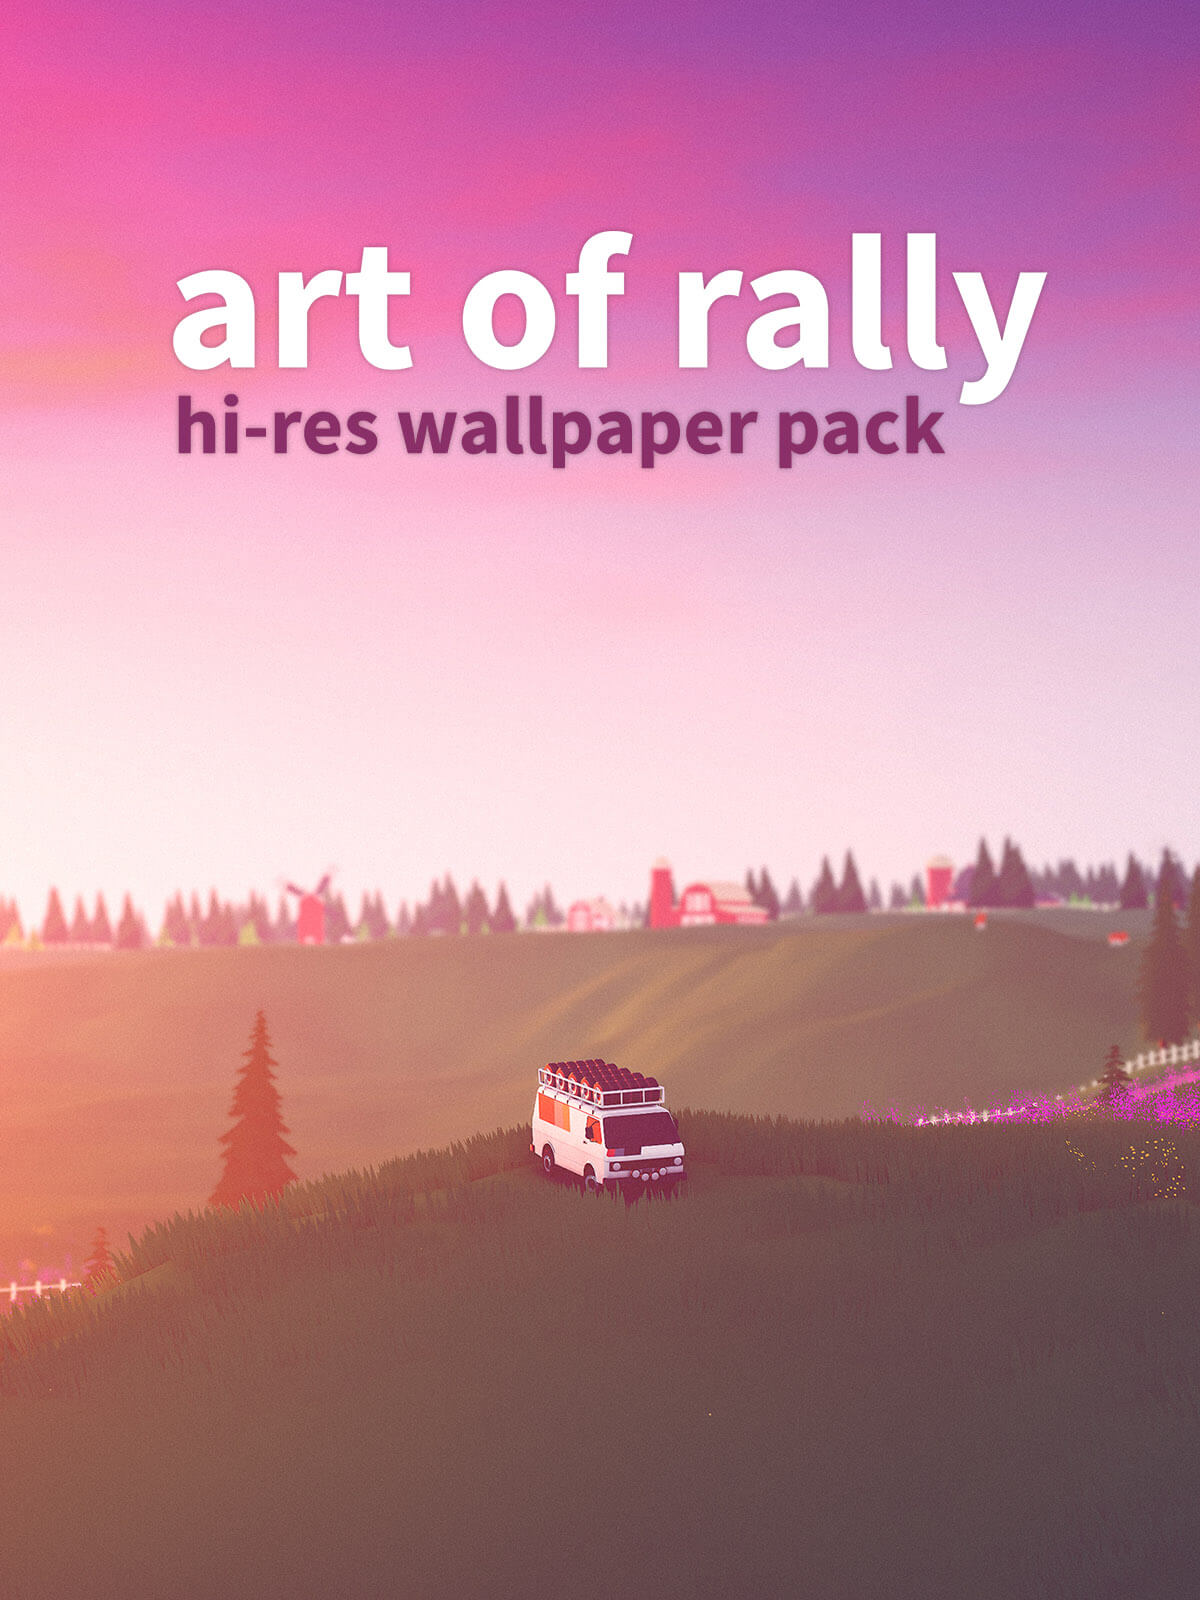 Art of rally wallpaper kostenlos â epic games